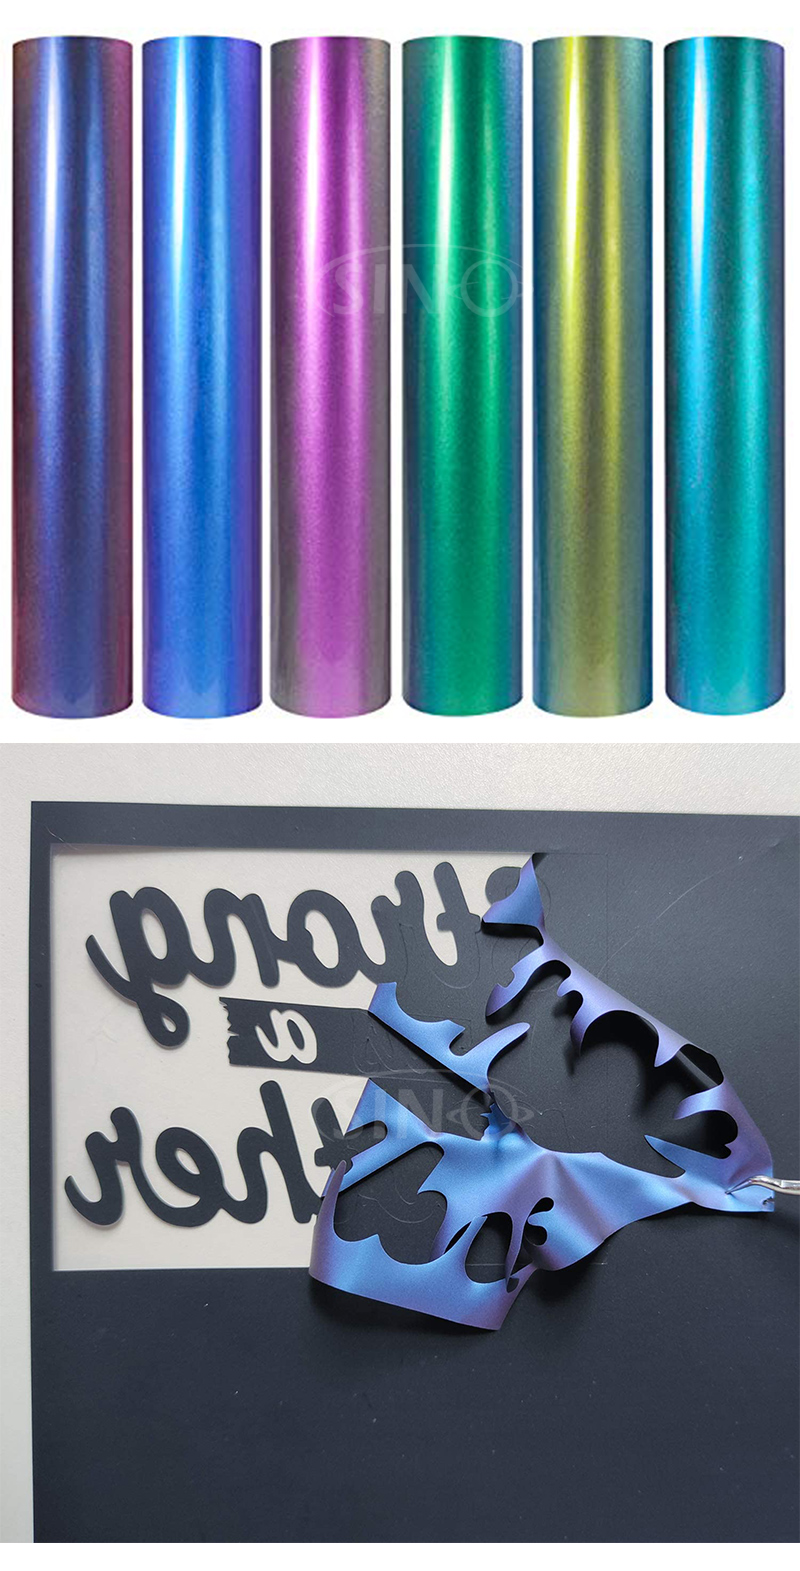 Heat Transfer Vinyl PU PVC Glitter Metallic Flock Hologram HTV For T-shirt